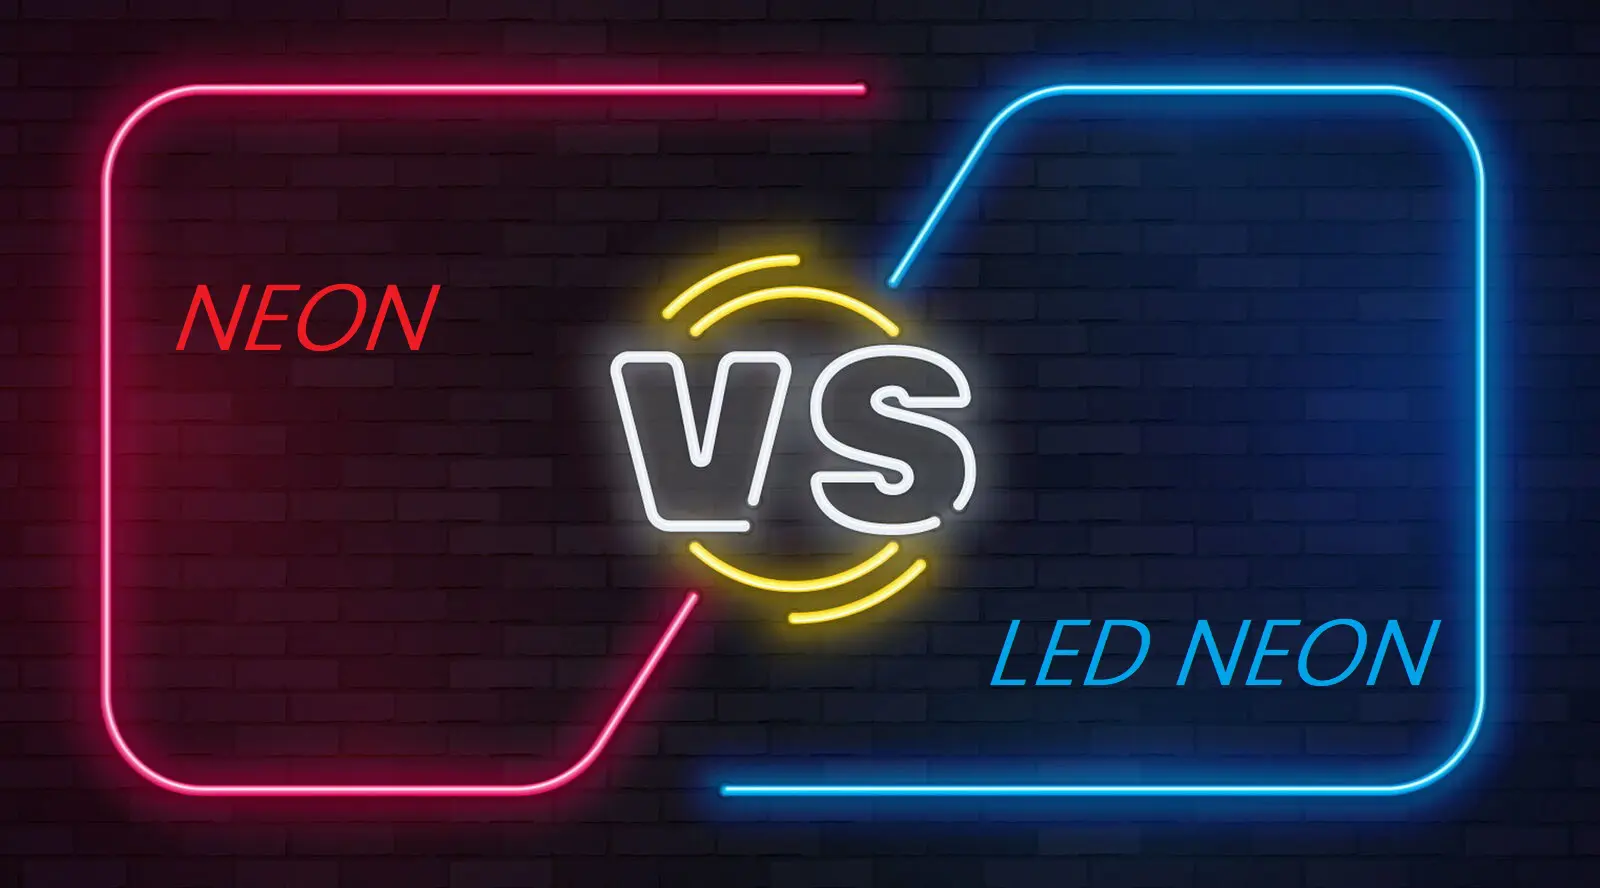 traditional neon vs led neon light